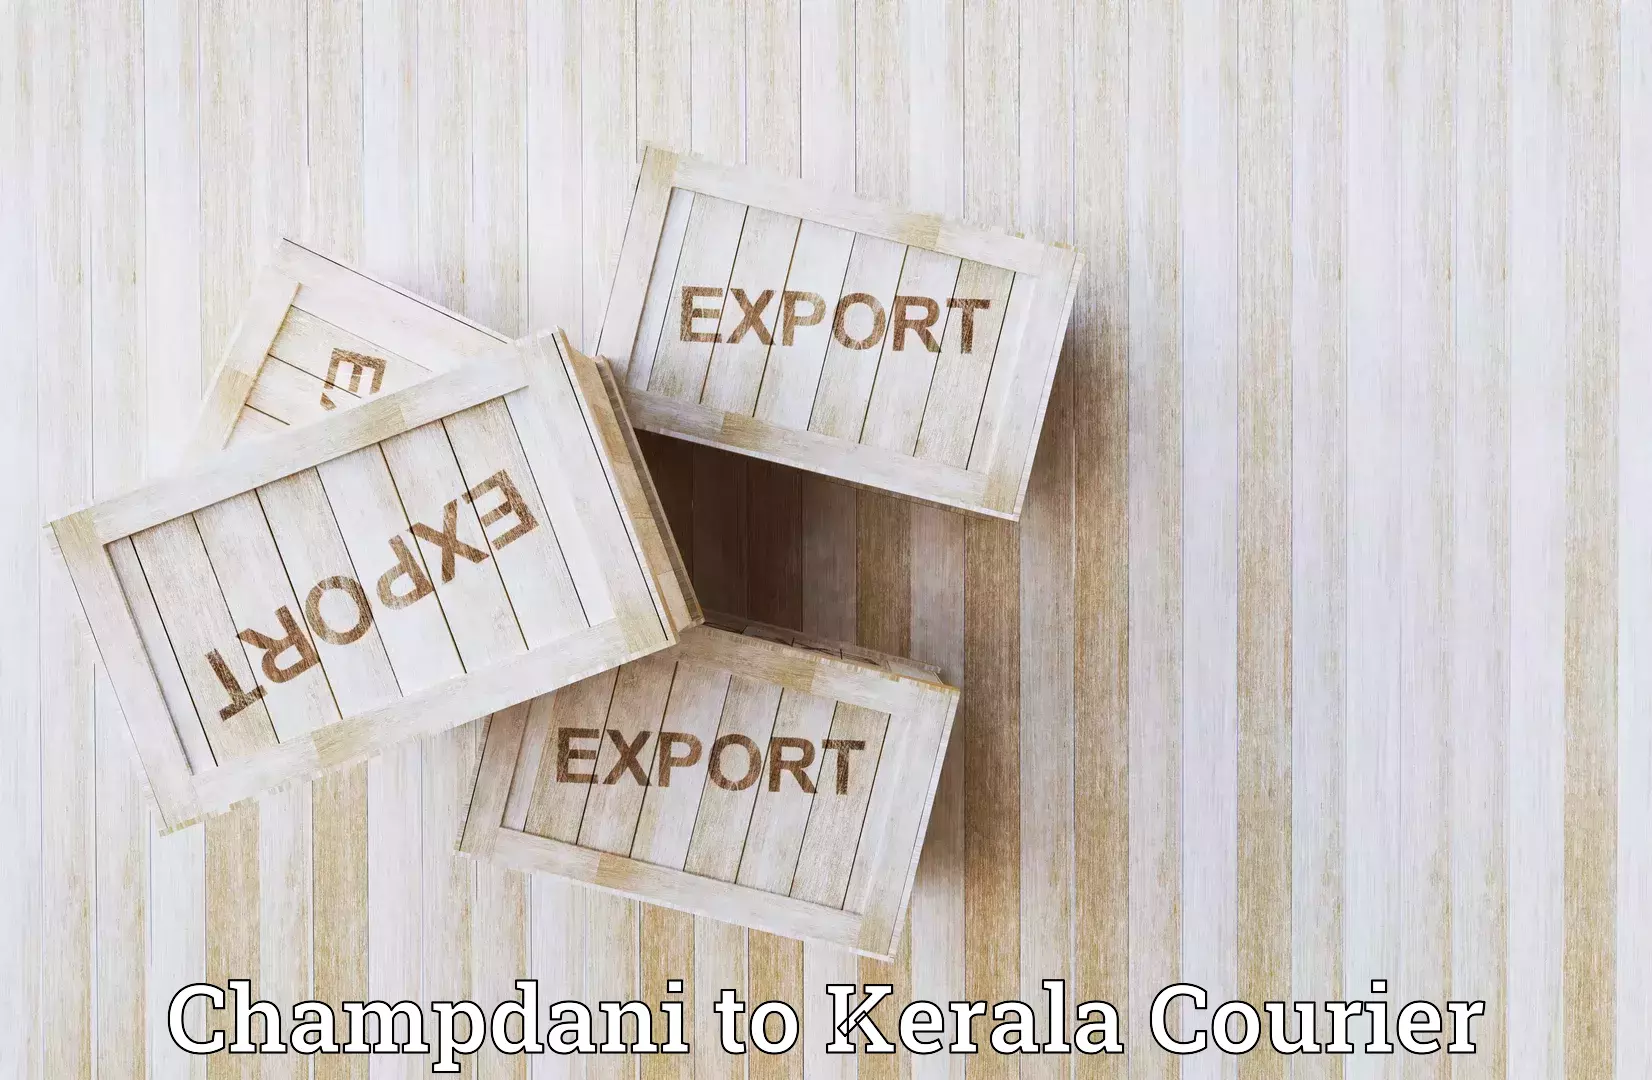 Modern courier technology Champdani to Kerala